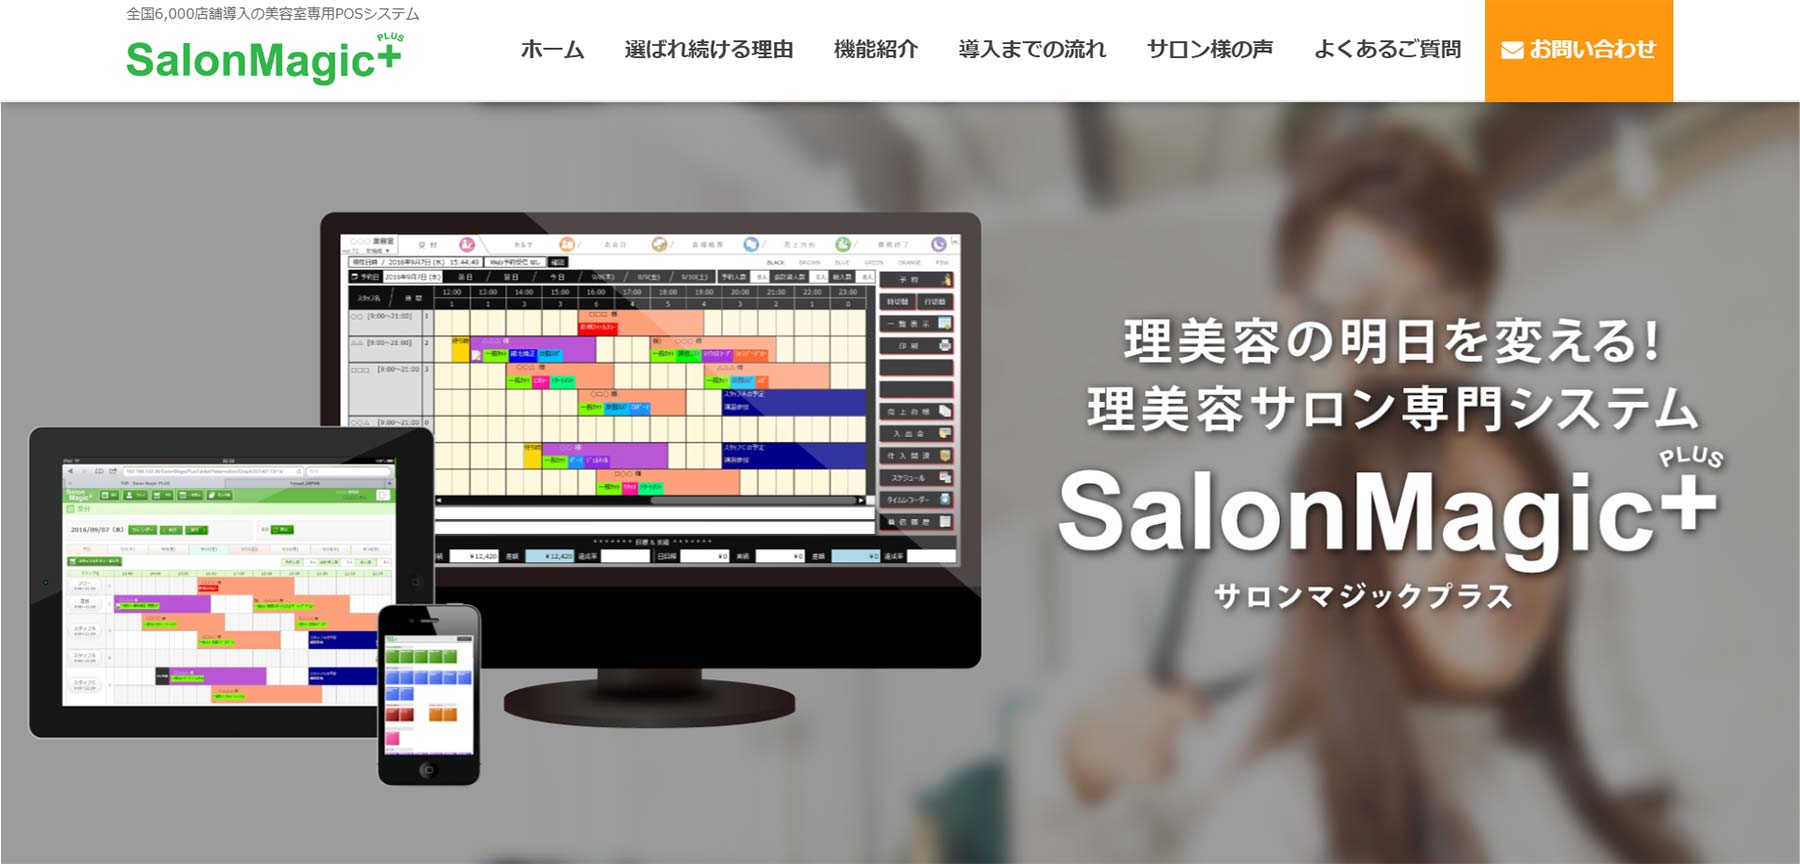 Salon Magic+公式Webサイト